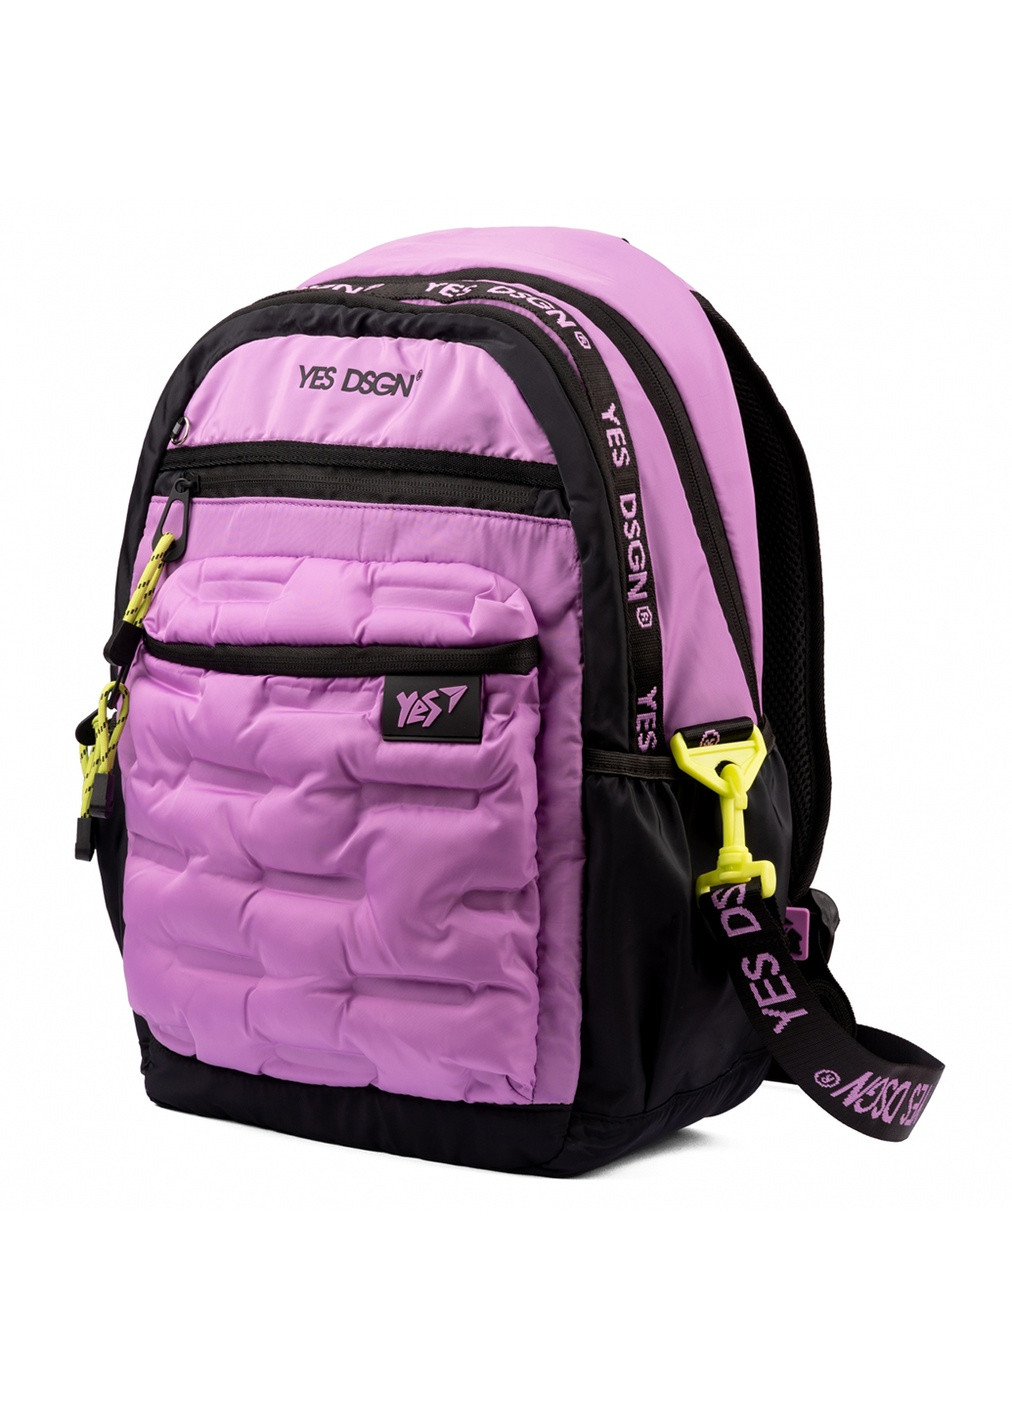 Рюкзак школьный TS-95 DSGN. Lilac Yes (259365794)